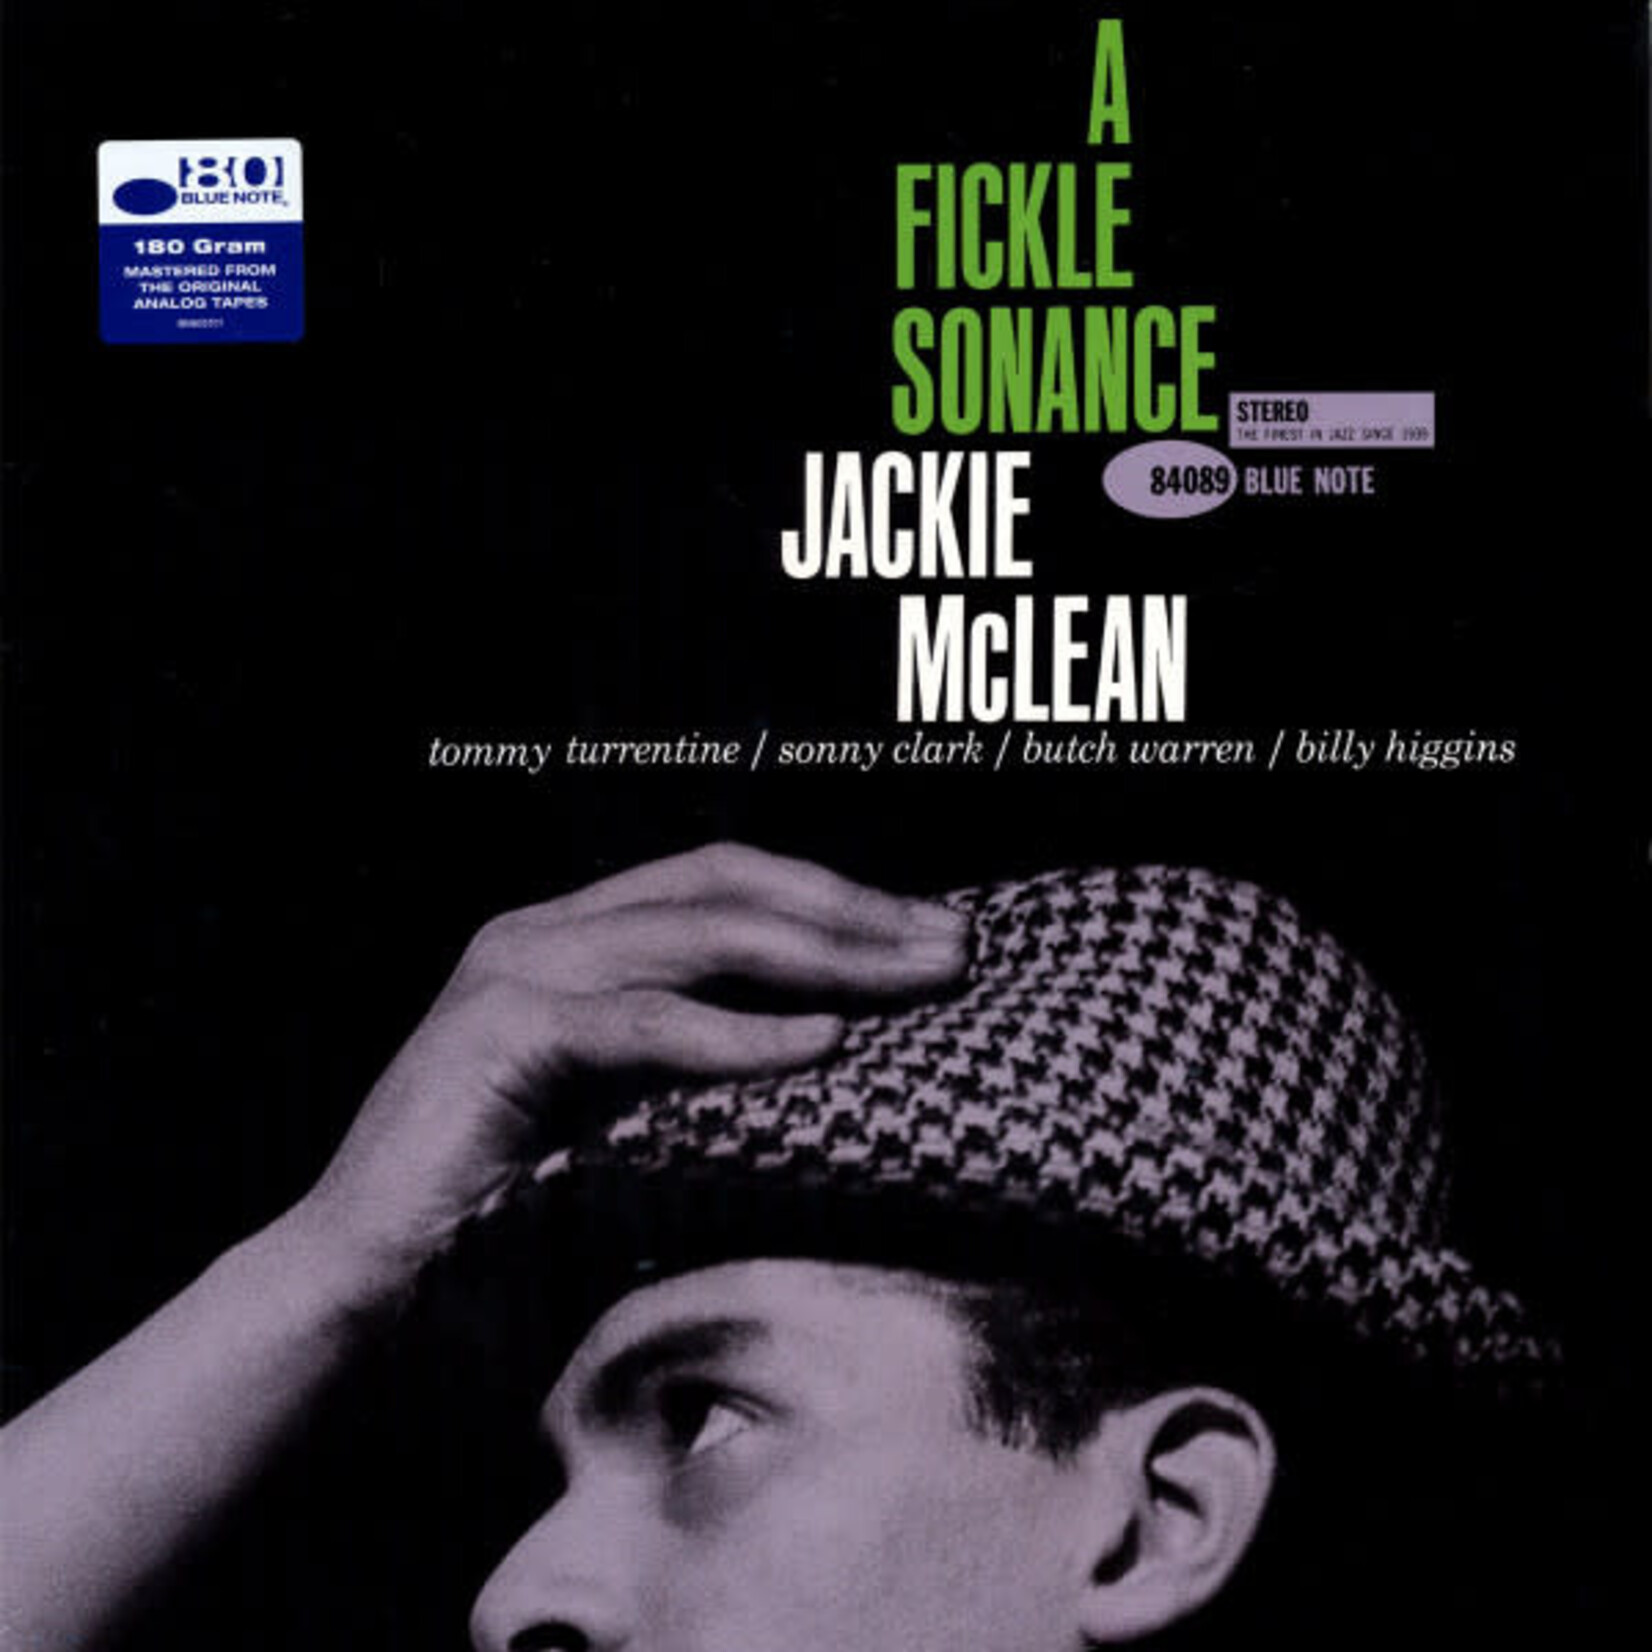 [New] Jackie McLean - A Fickle Sonance (Blue Note 80 series)